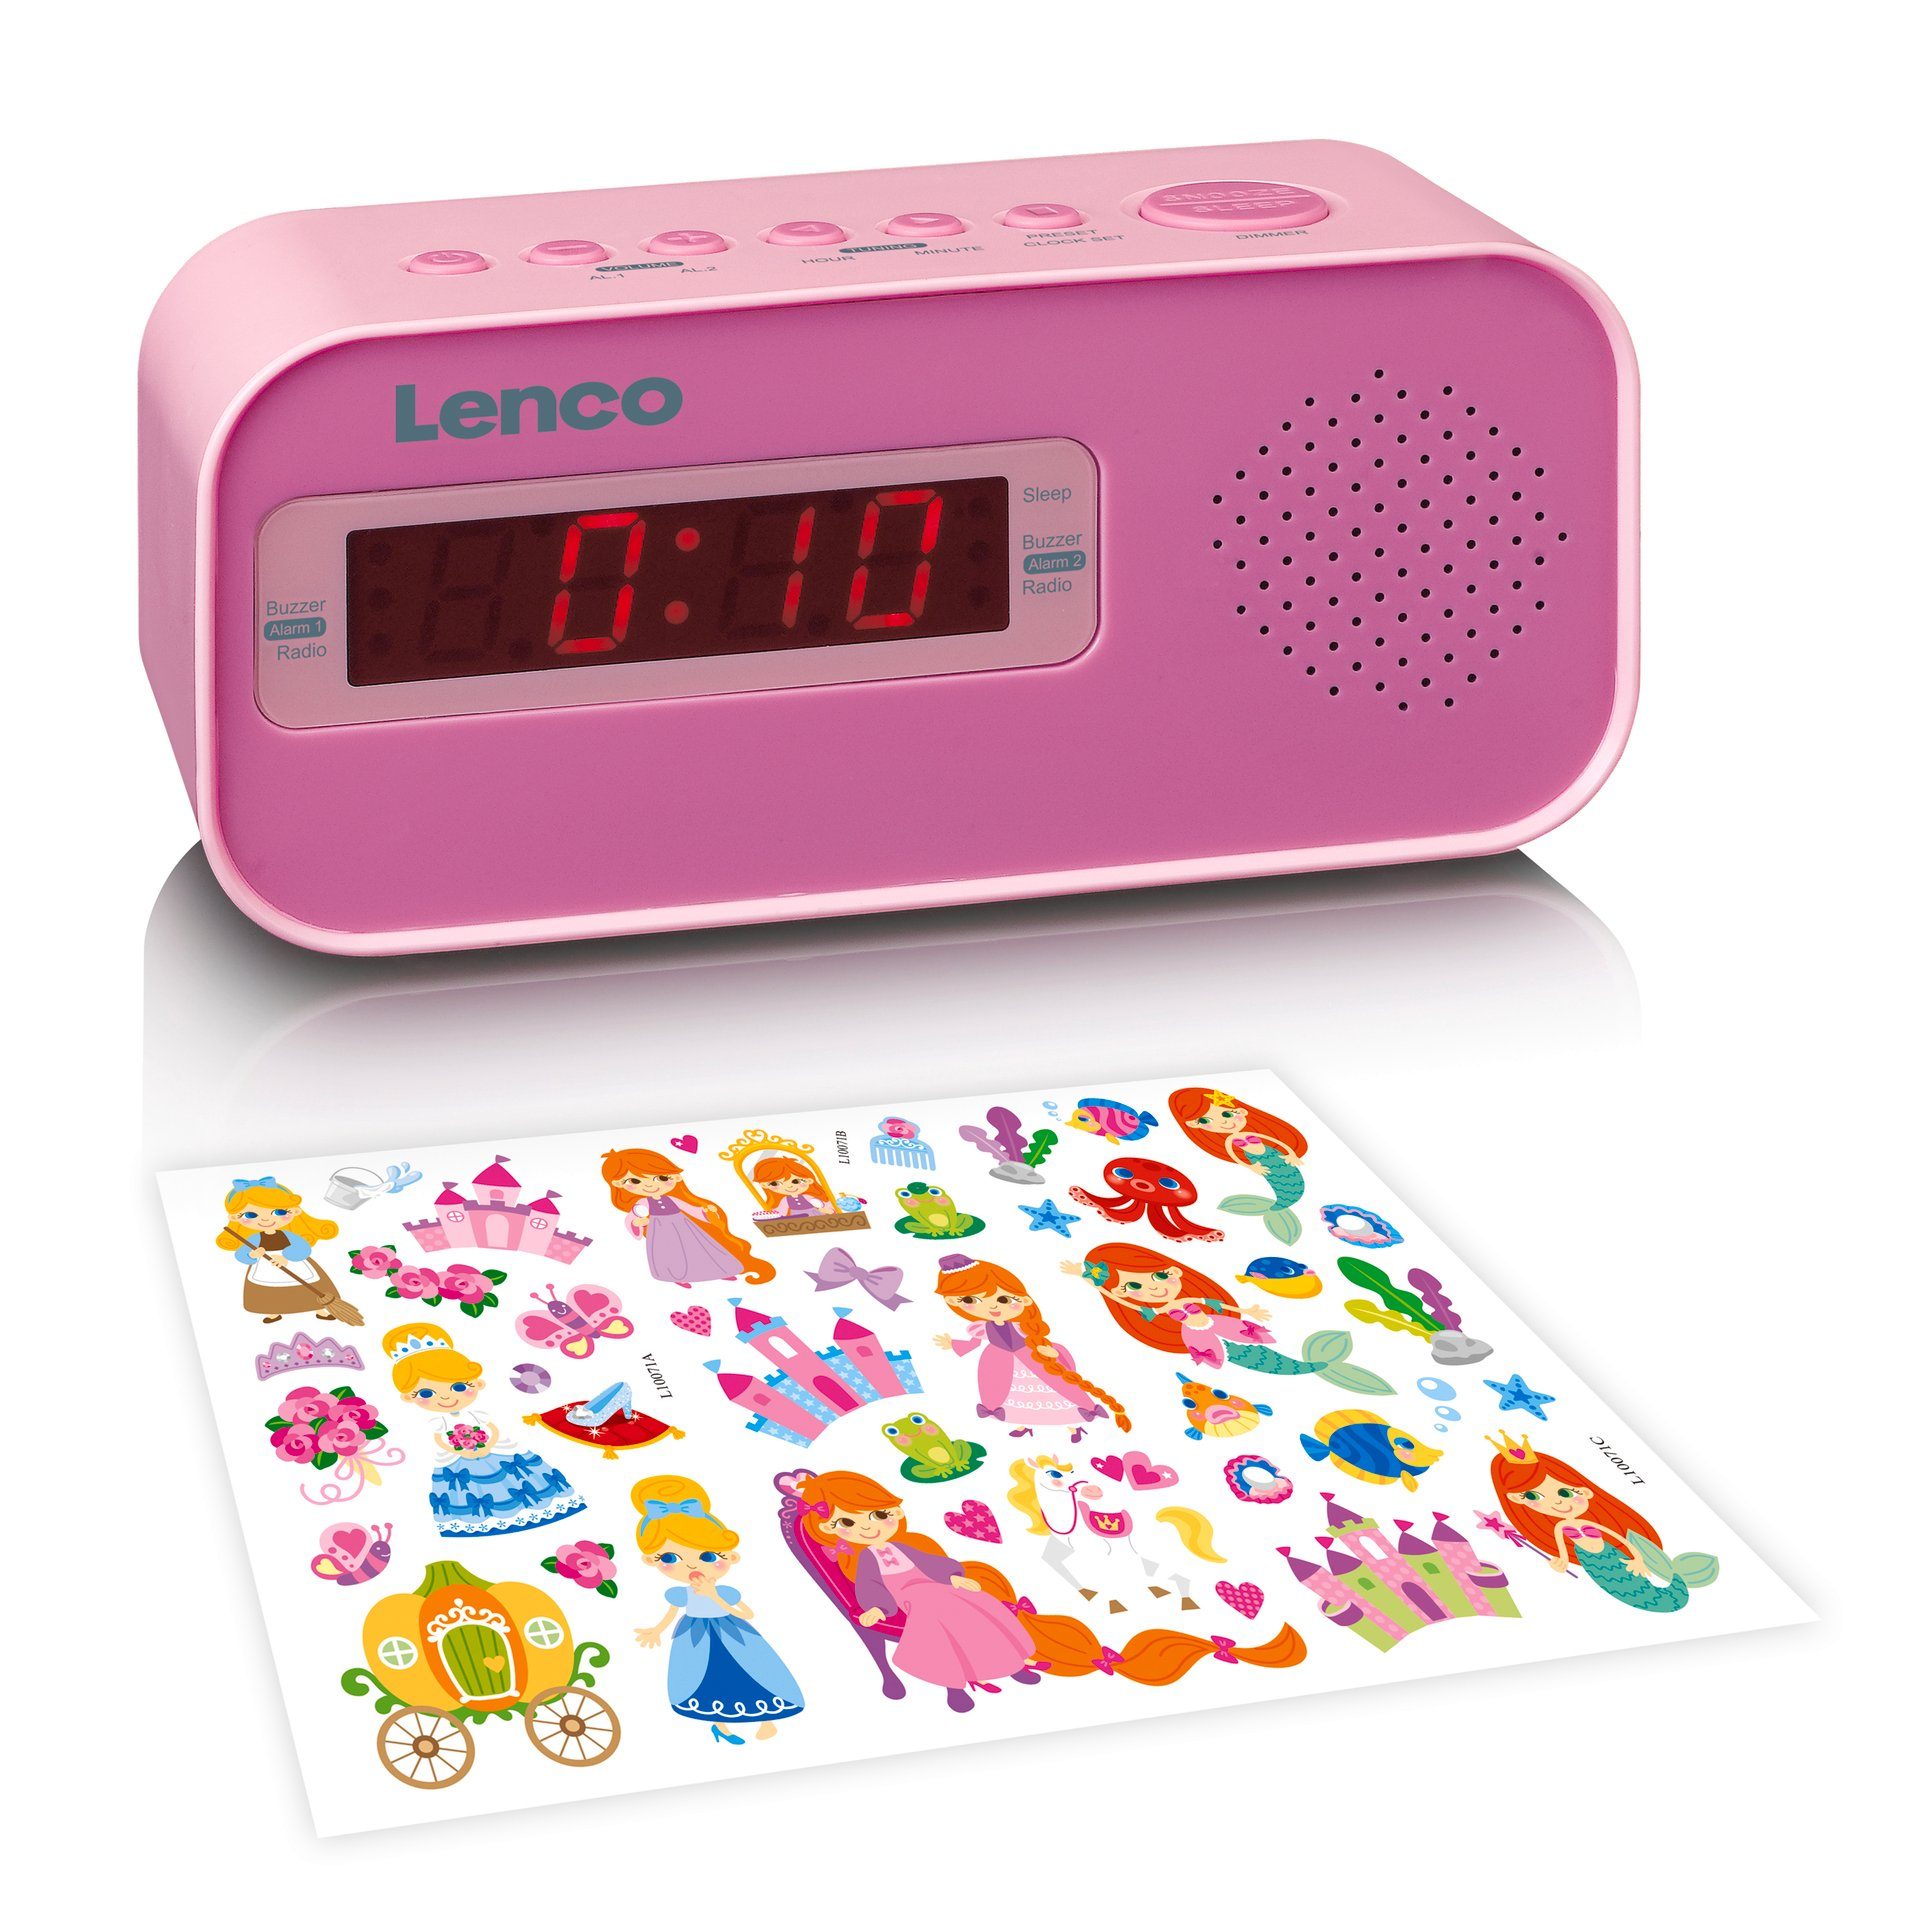 Uhrenradio CR-205 (FM-Tuner) Lenco Rosa